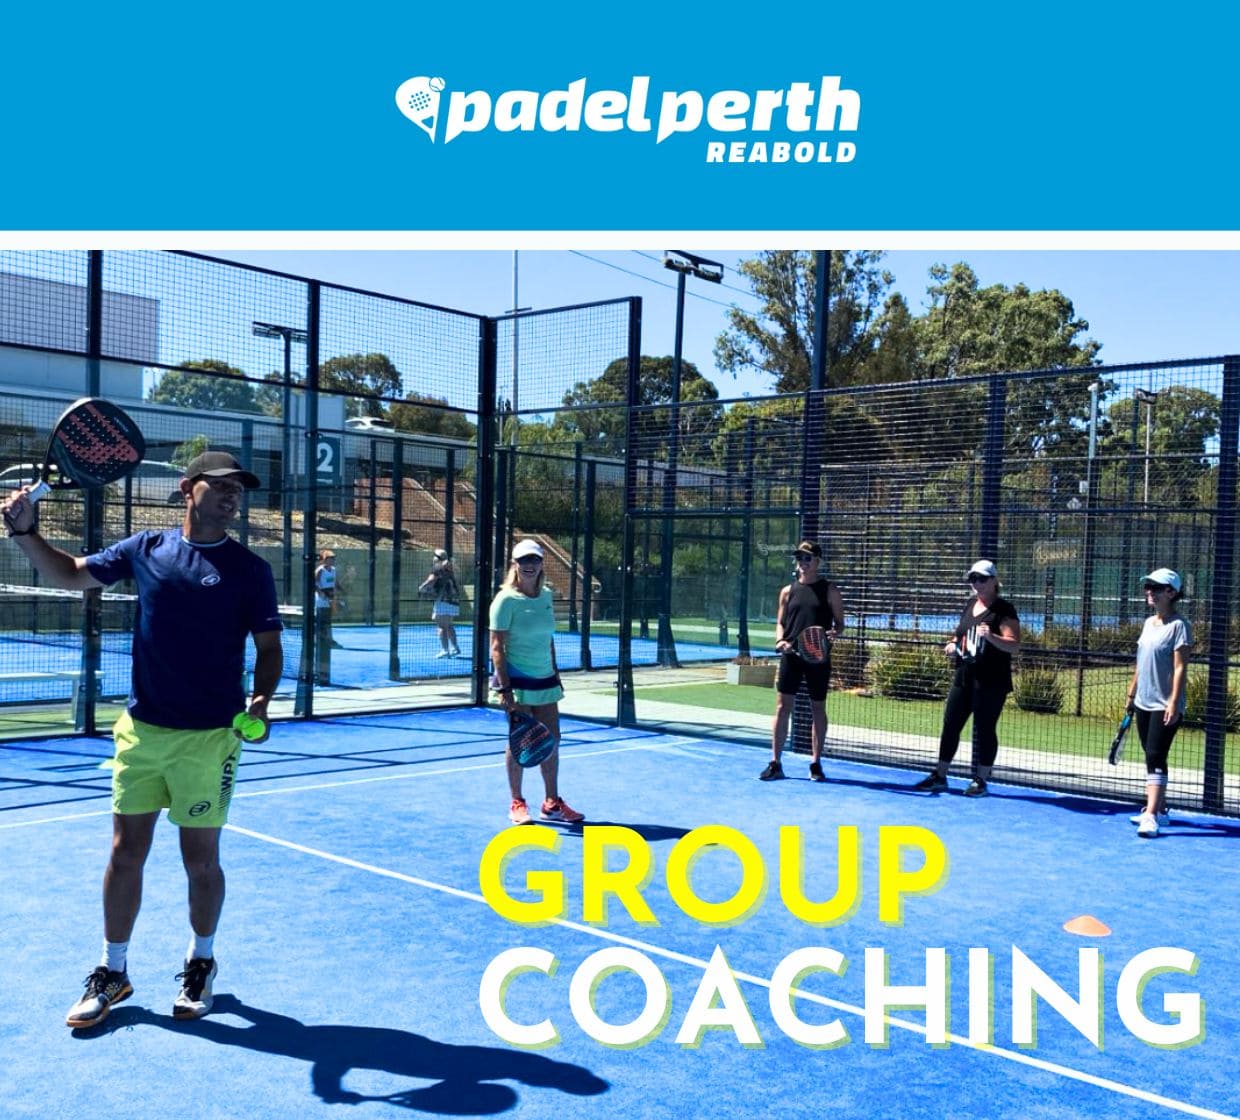 Group Coaching - Play Padel Perth